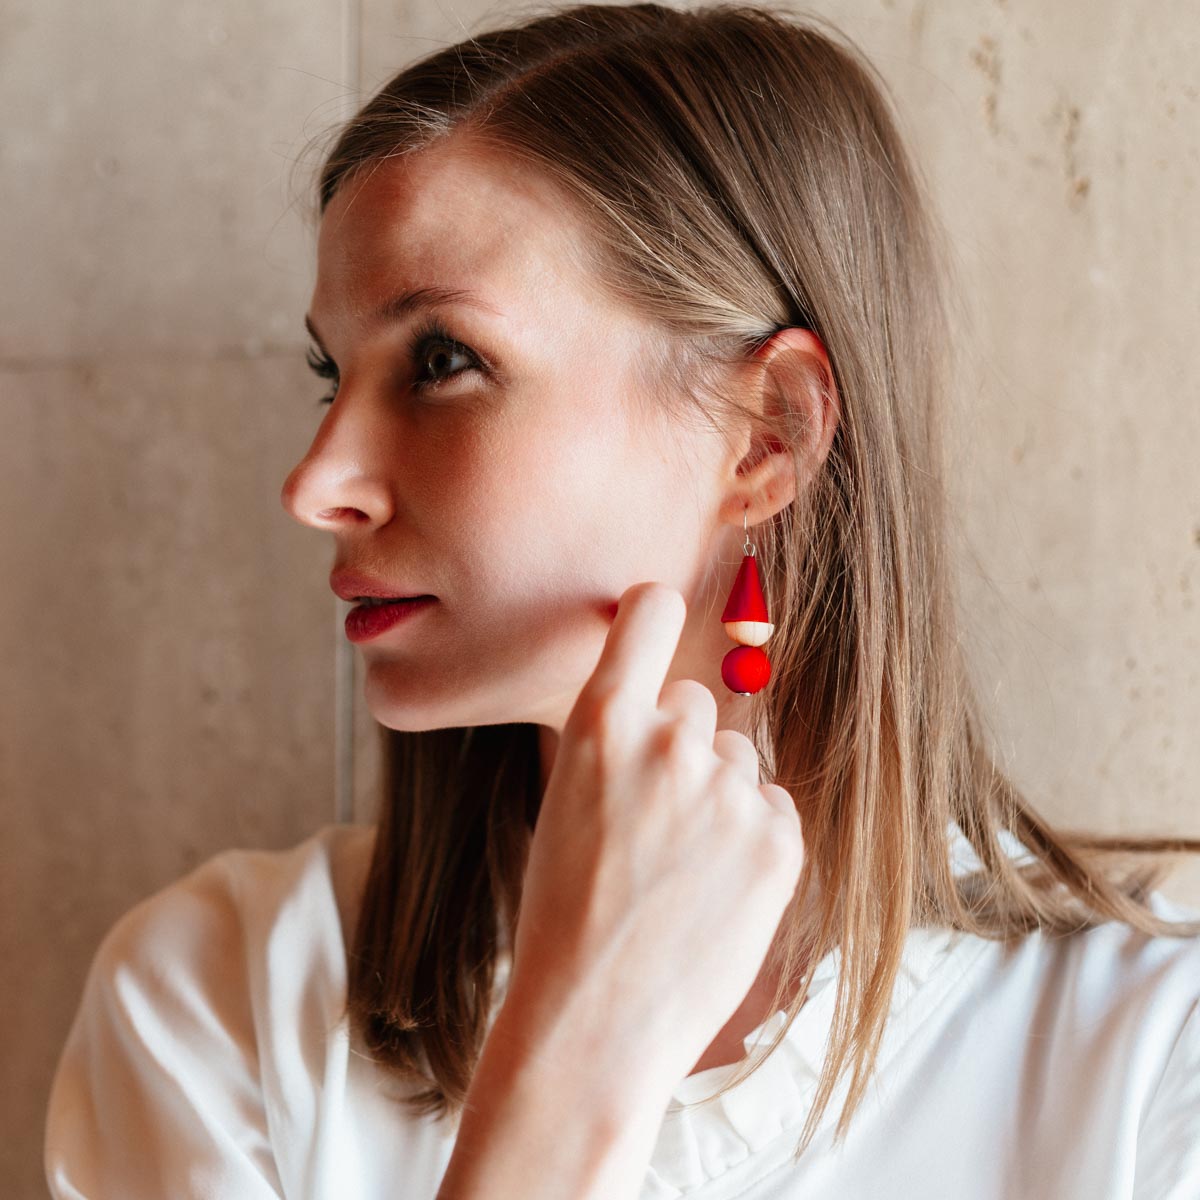 Korvatunturi earrings, red